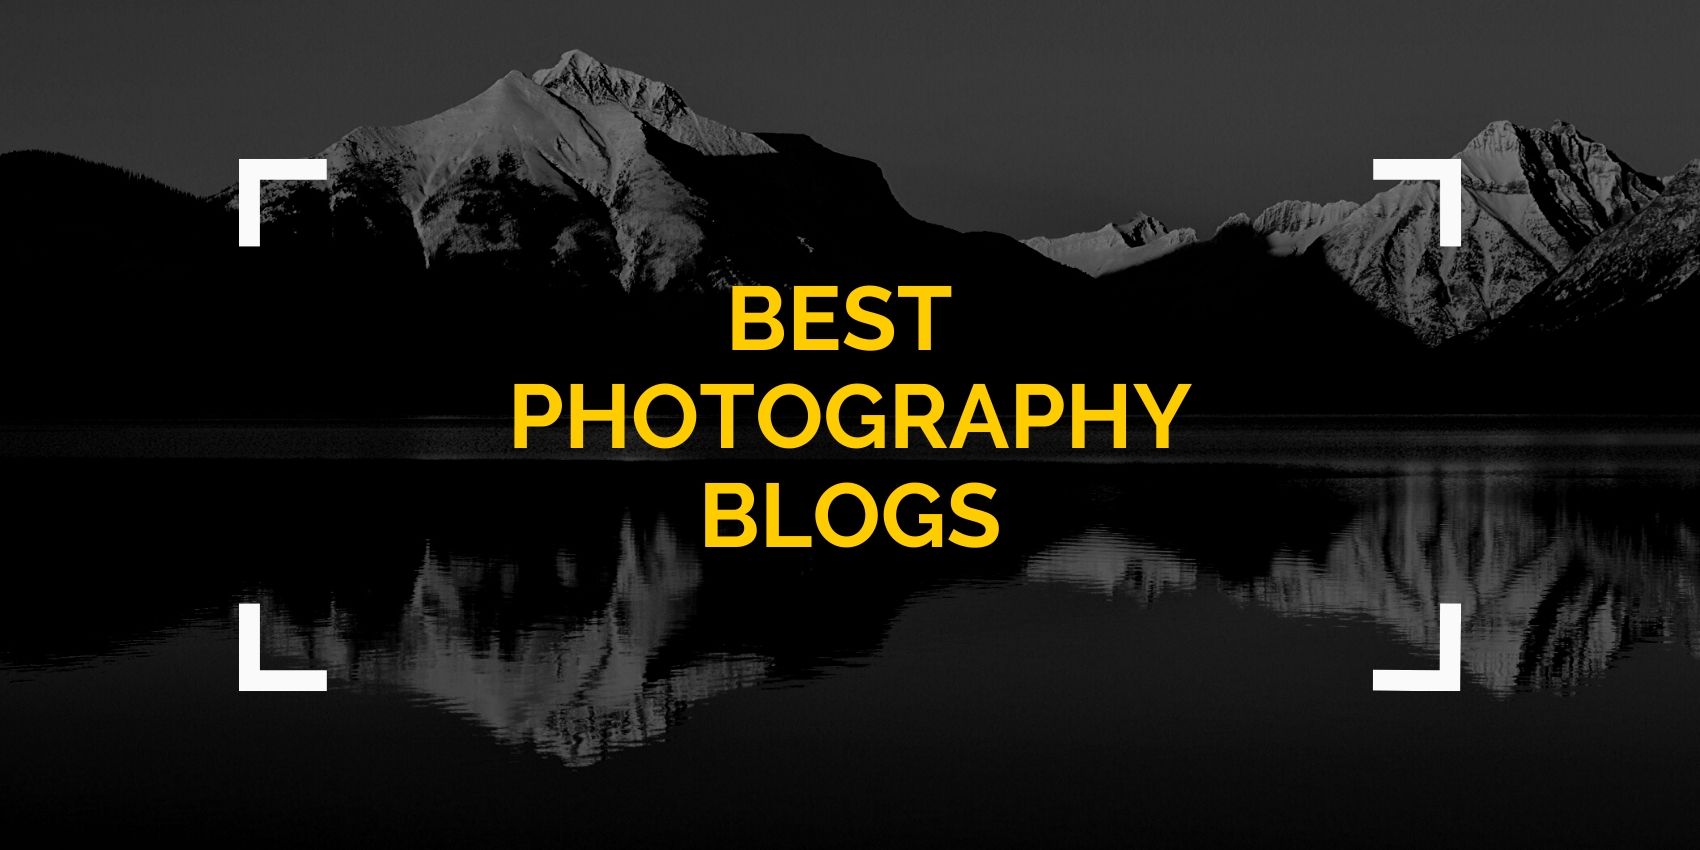 How to Photograph Lake Louise - Brendan van Son Photography